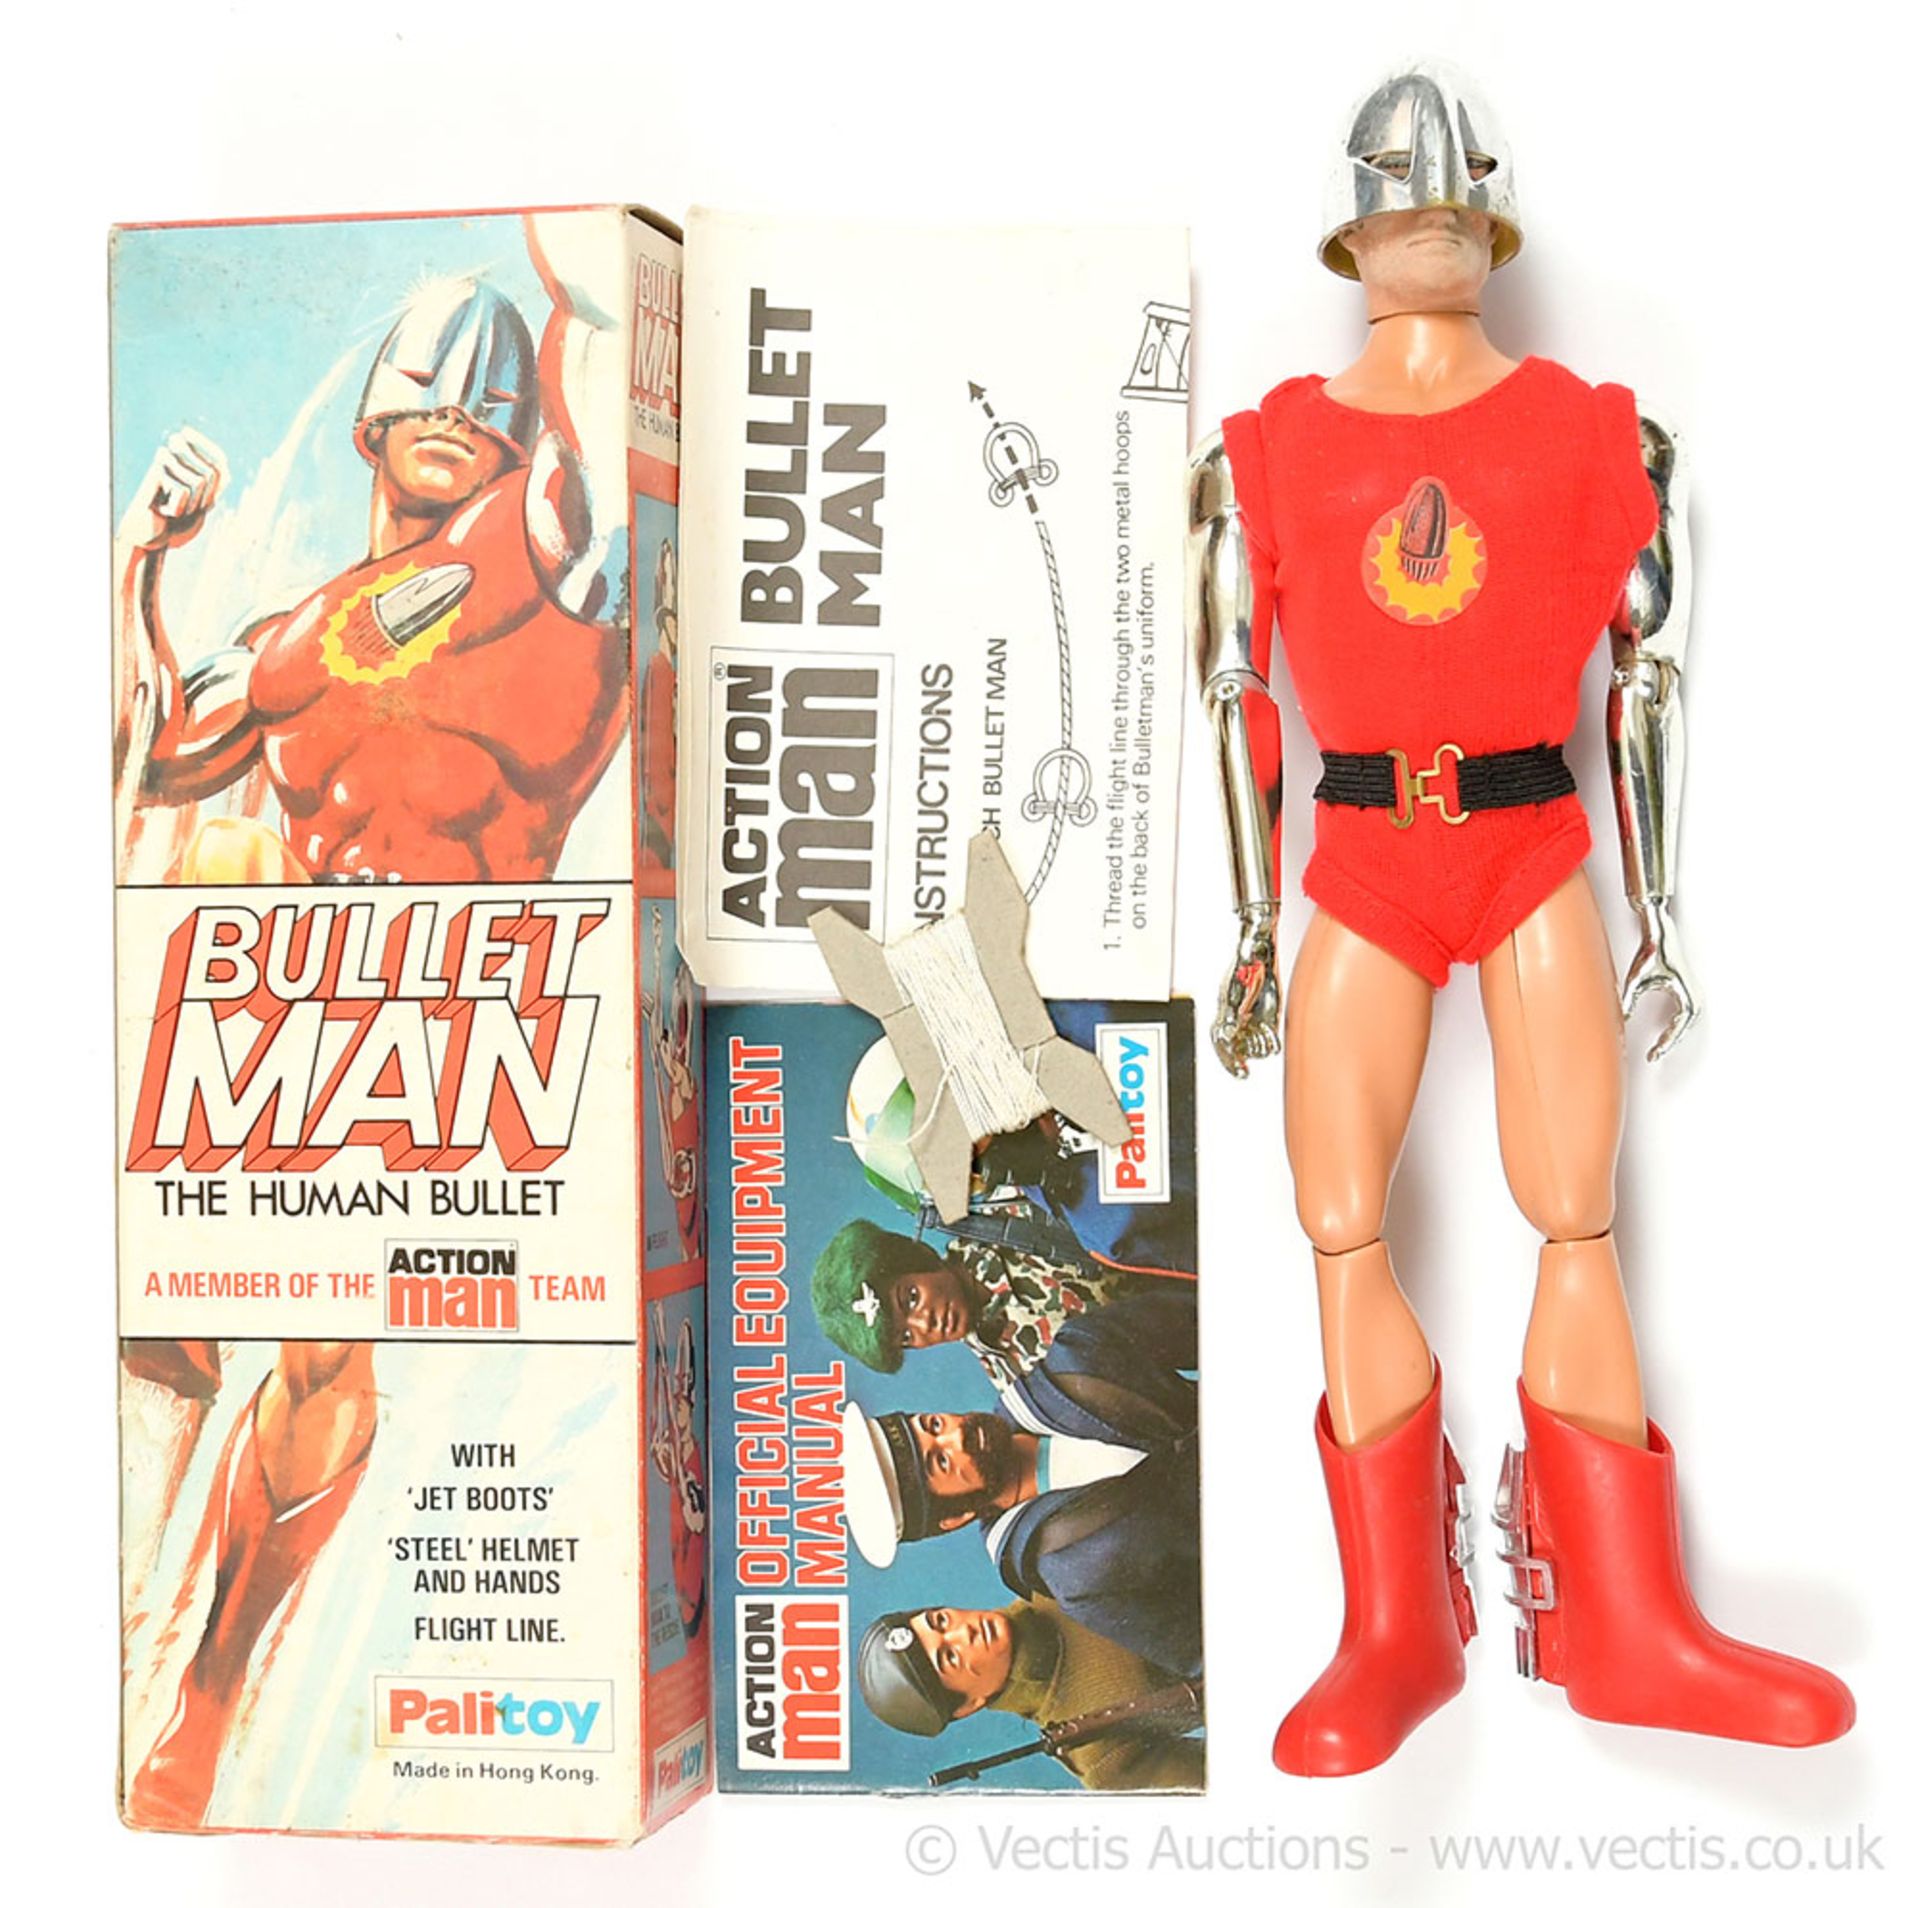 Palitoy Action Man Vintage Bullet Man